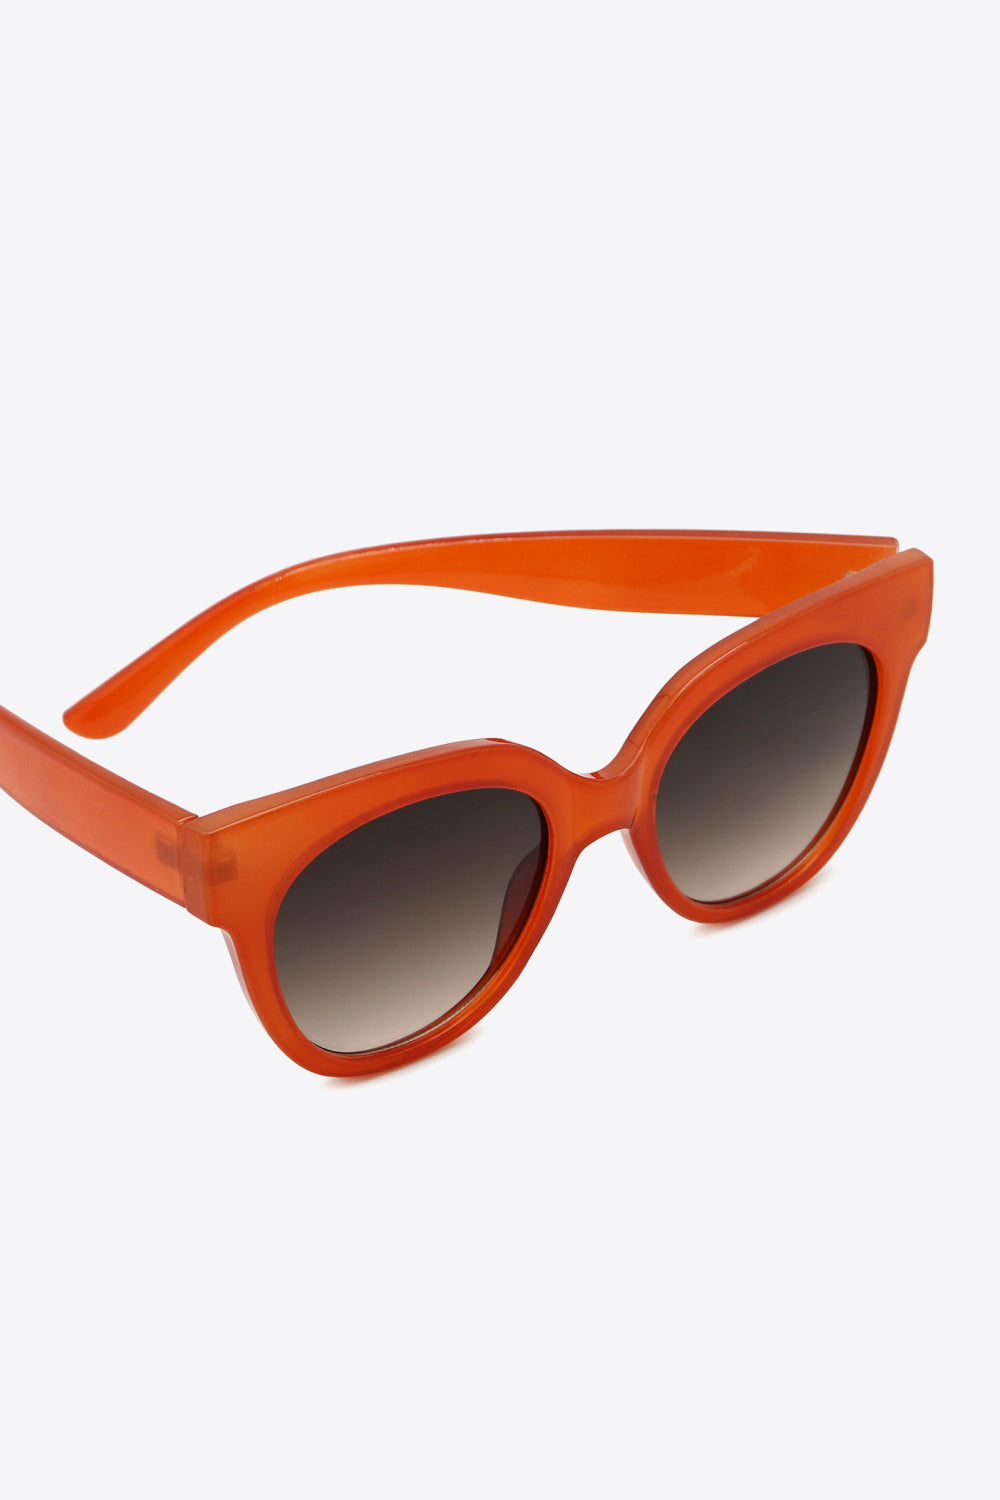 UV400 Polycarbonate Round Sunglasses - BEAUTY COSMOTICS SHOP